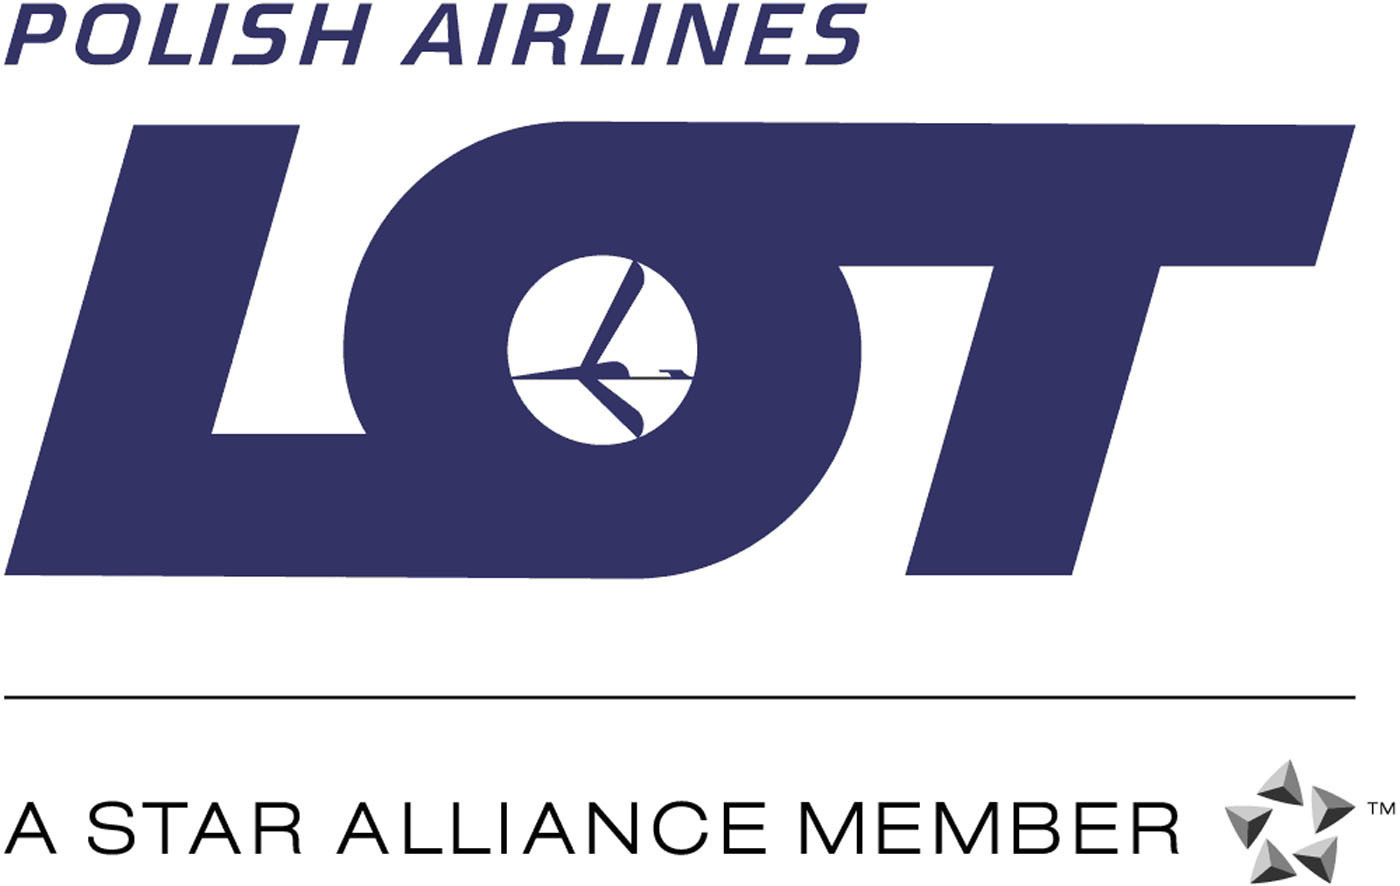 LOT Polish Airlines Logo